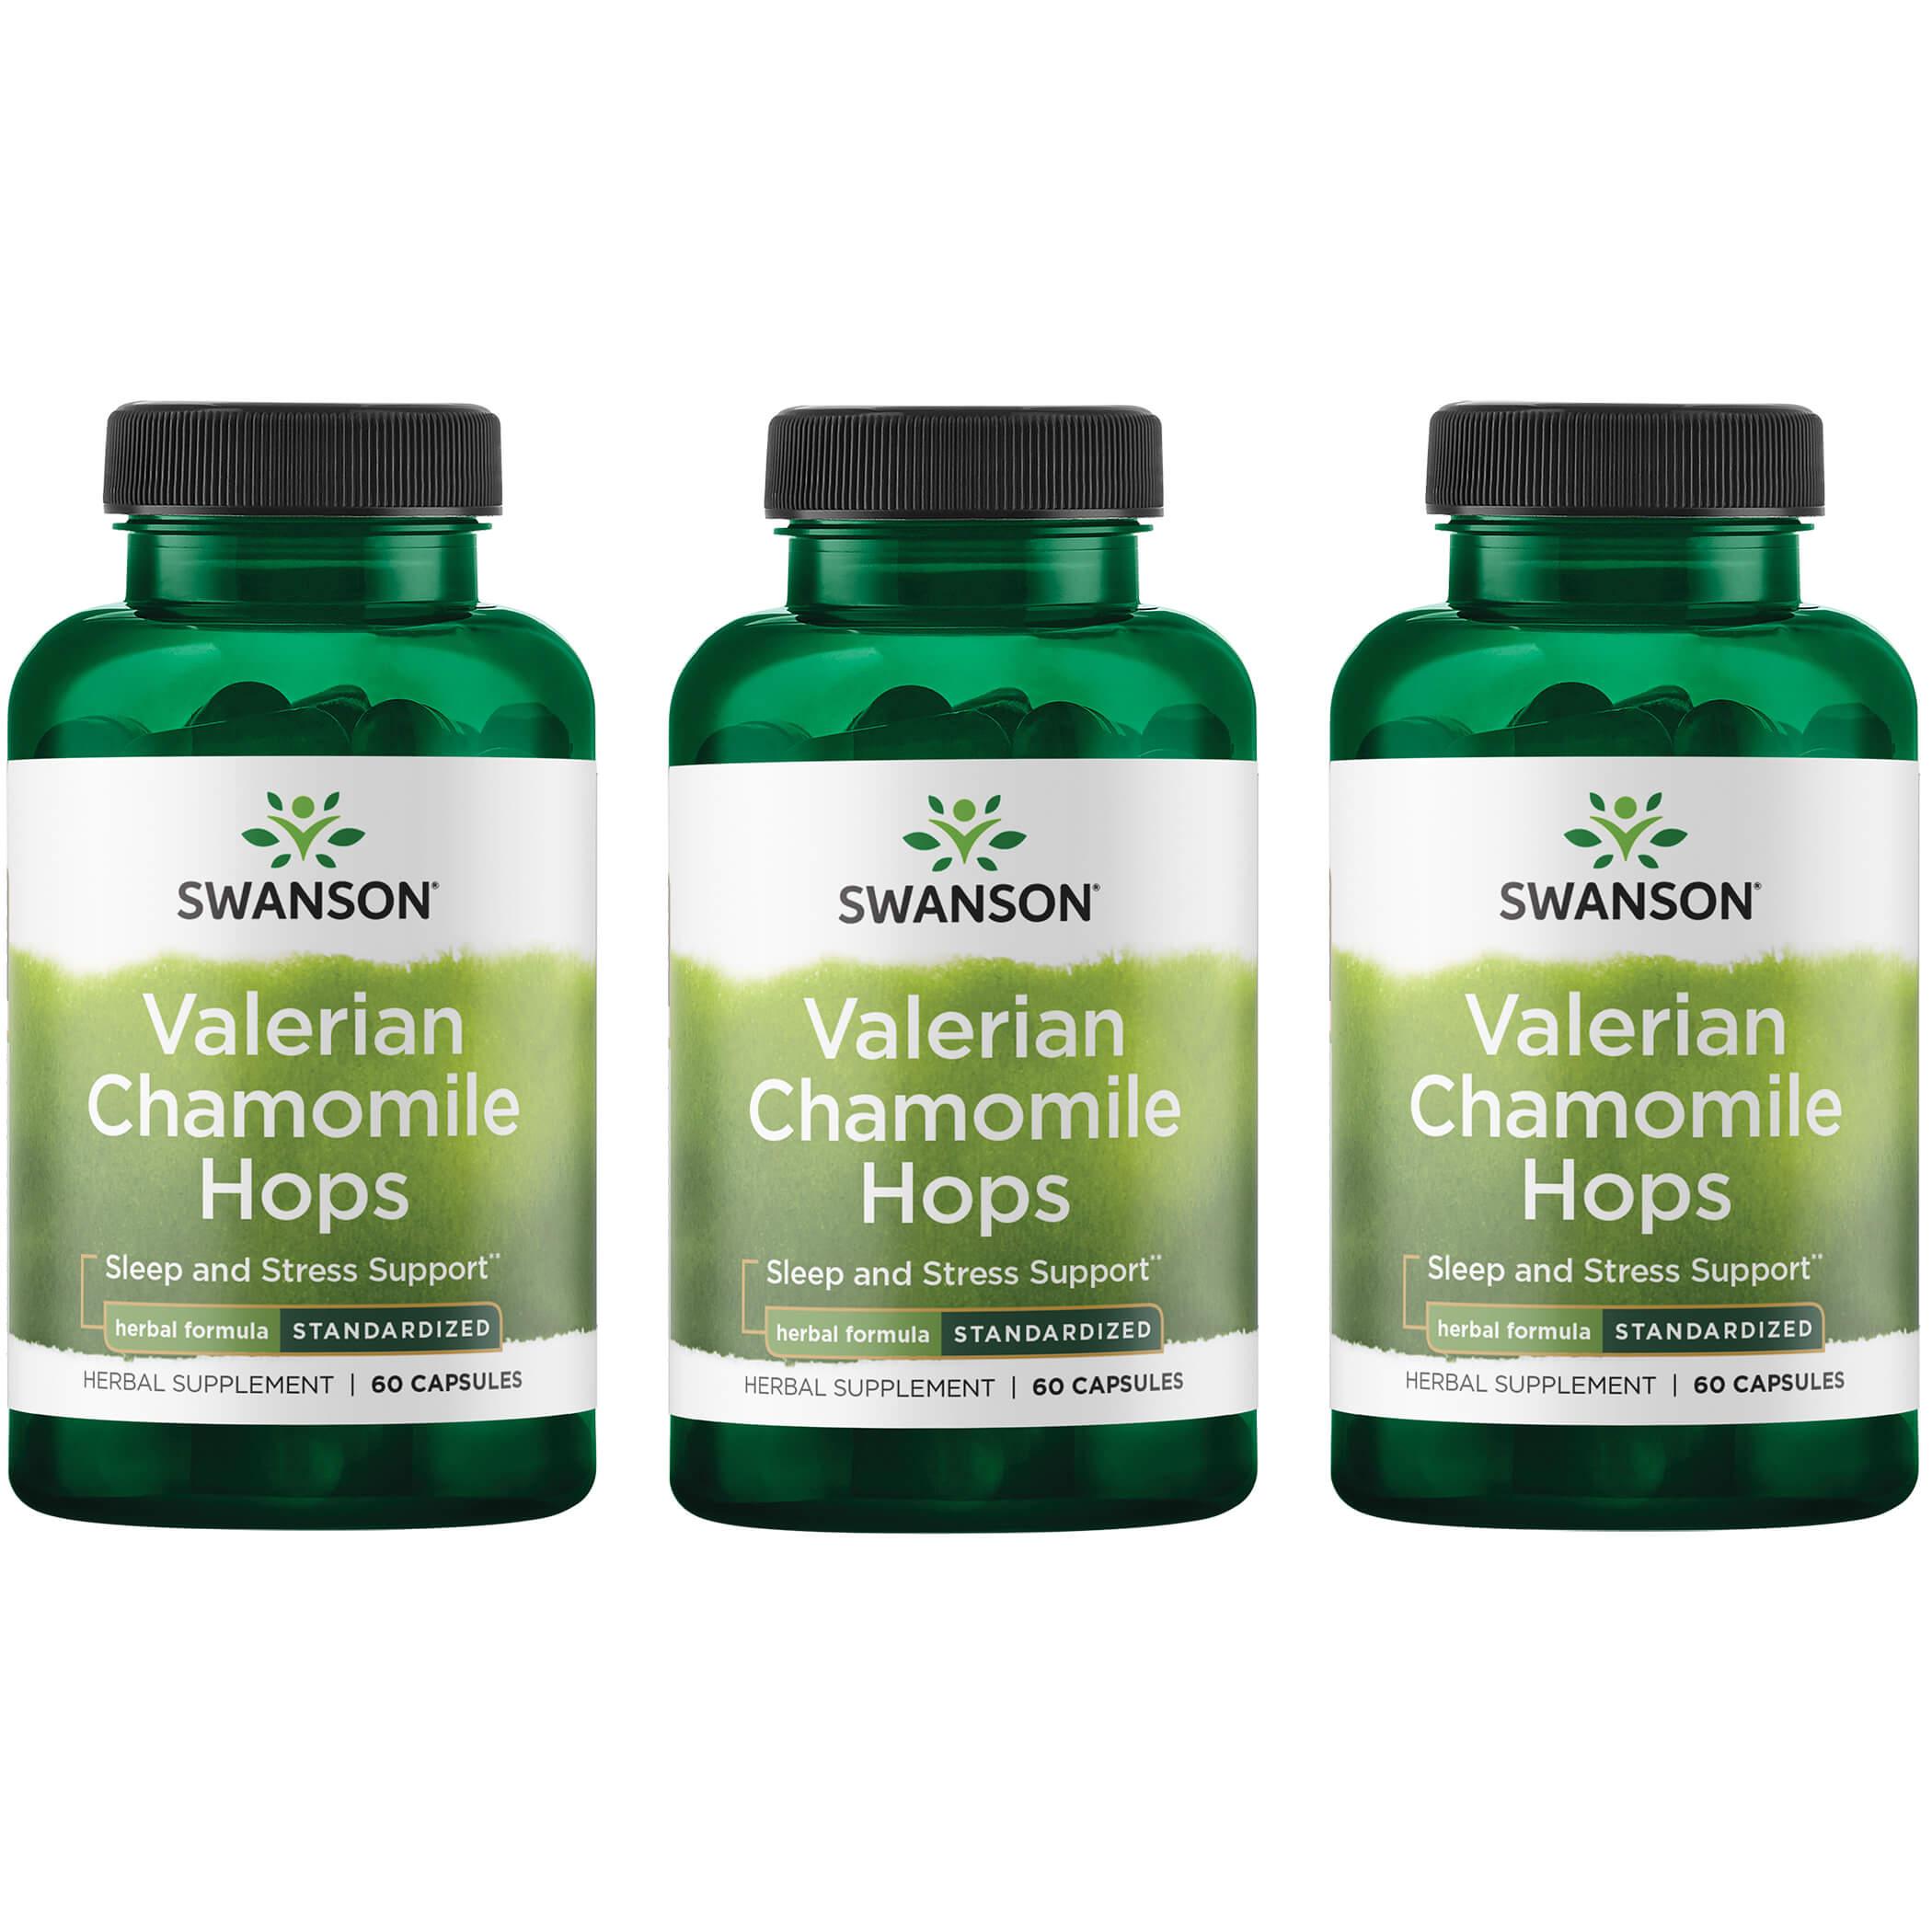 Swanson Superior Herbs Valerian Chamomile Hops - Standardized 3 Pack Vitamin 60 Caps